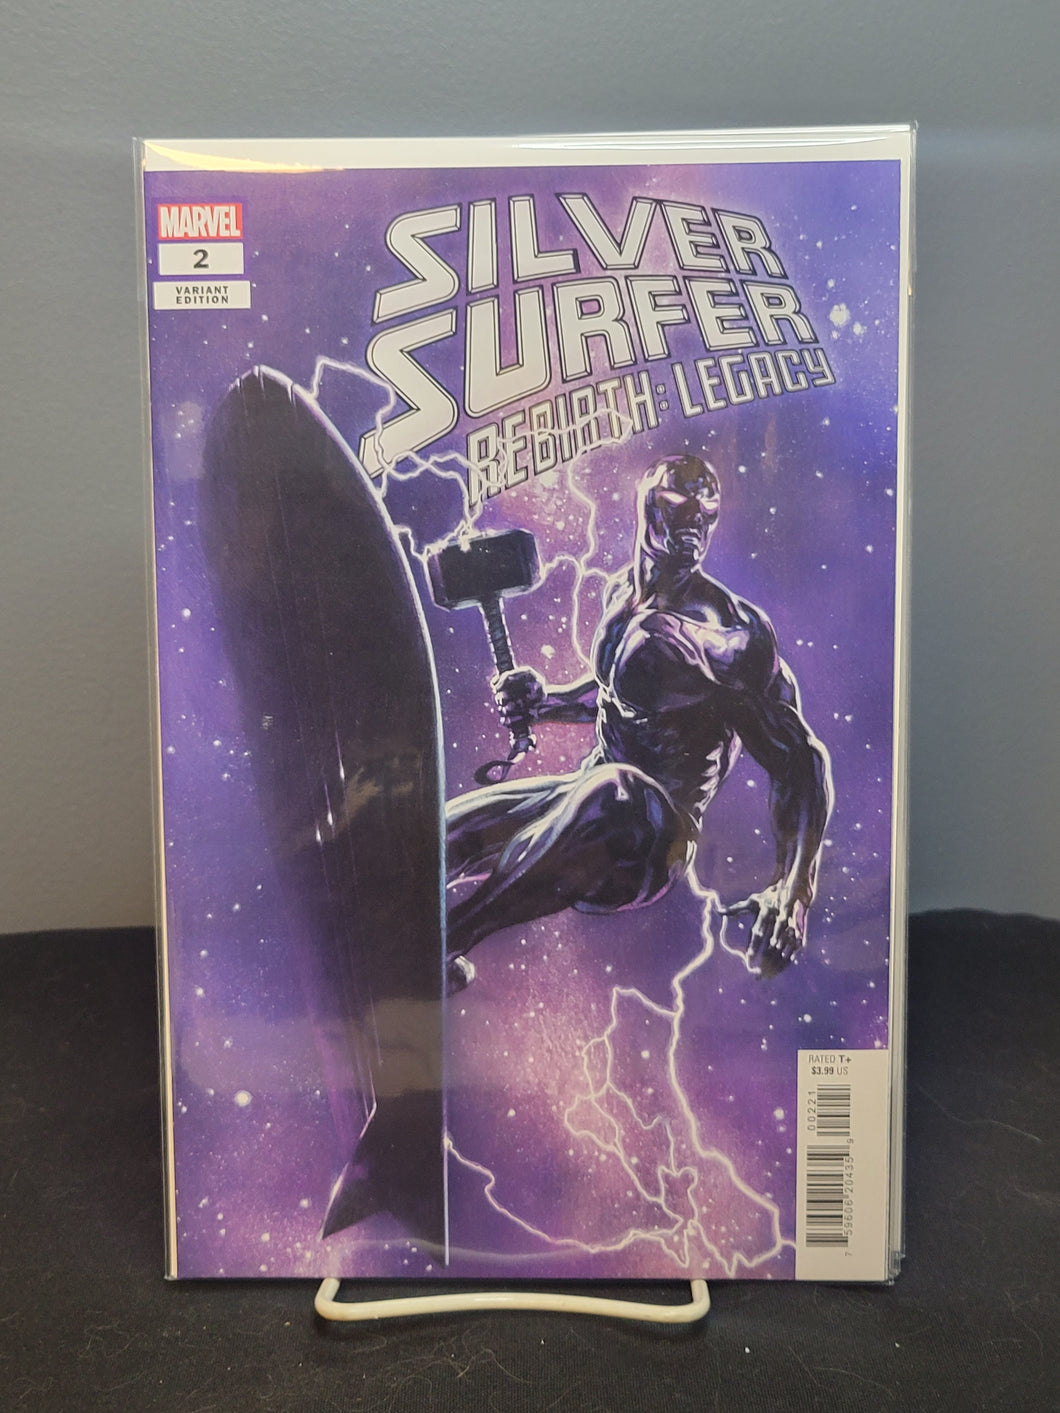 Silver Surfer Rebirth Legacy #2 Variant